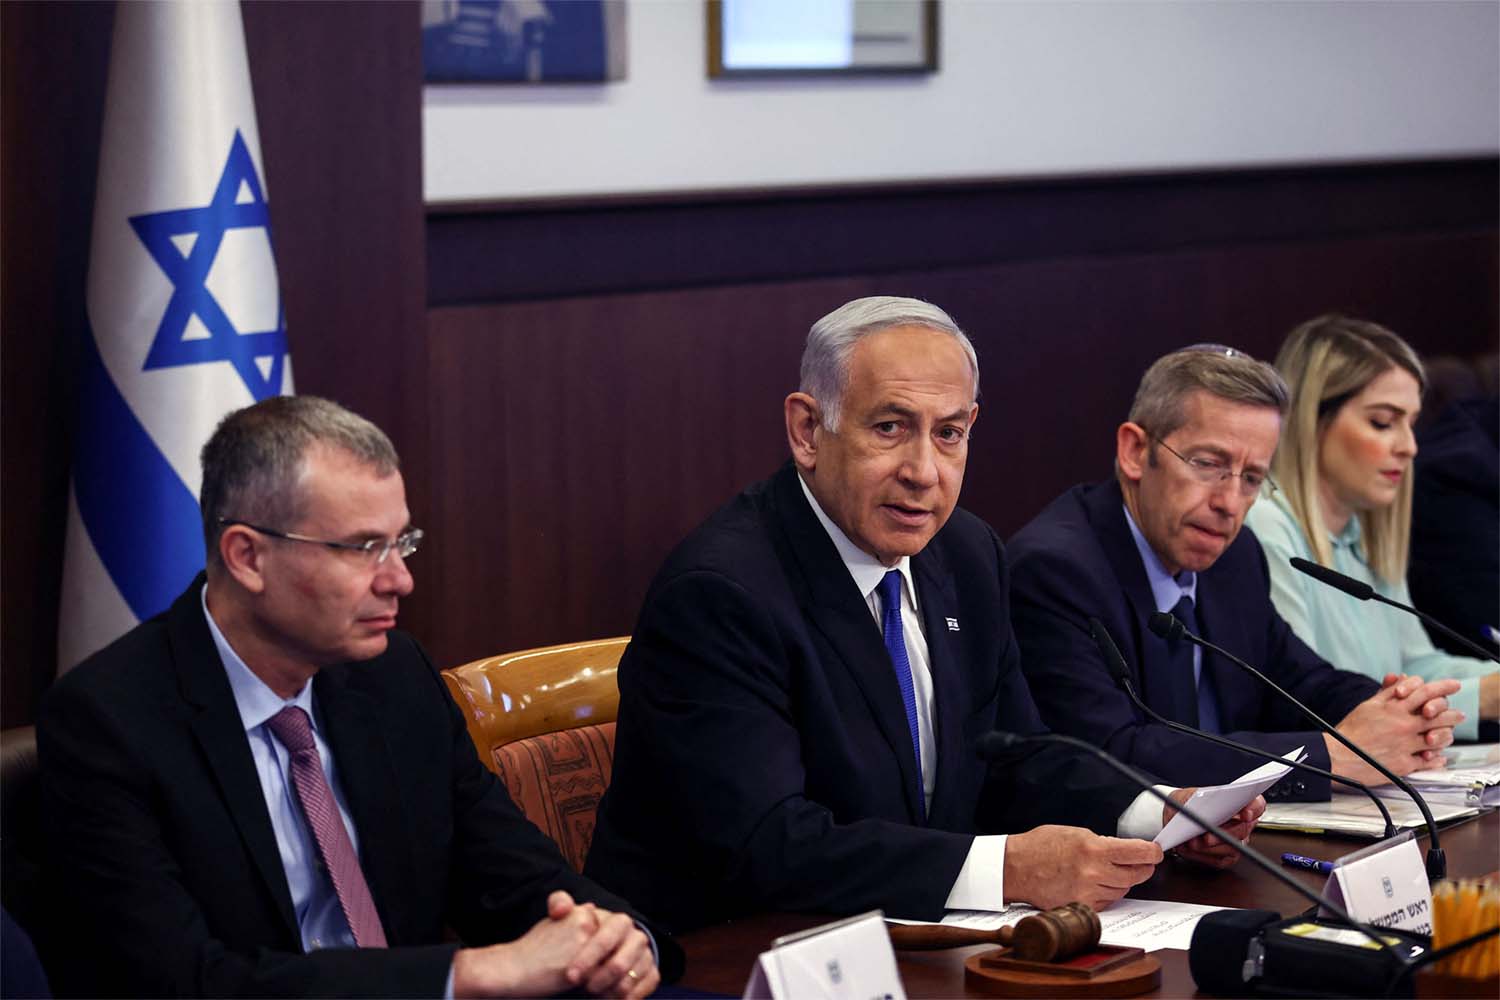 Netanyahu levelled sharp criticism of the IAEA